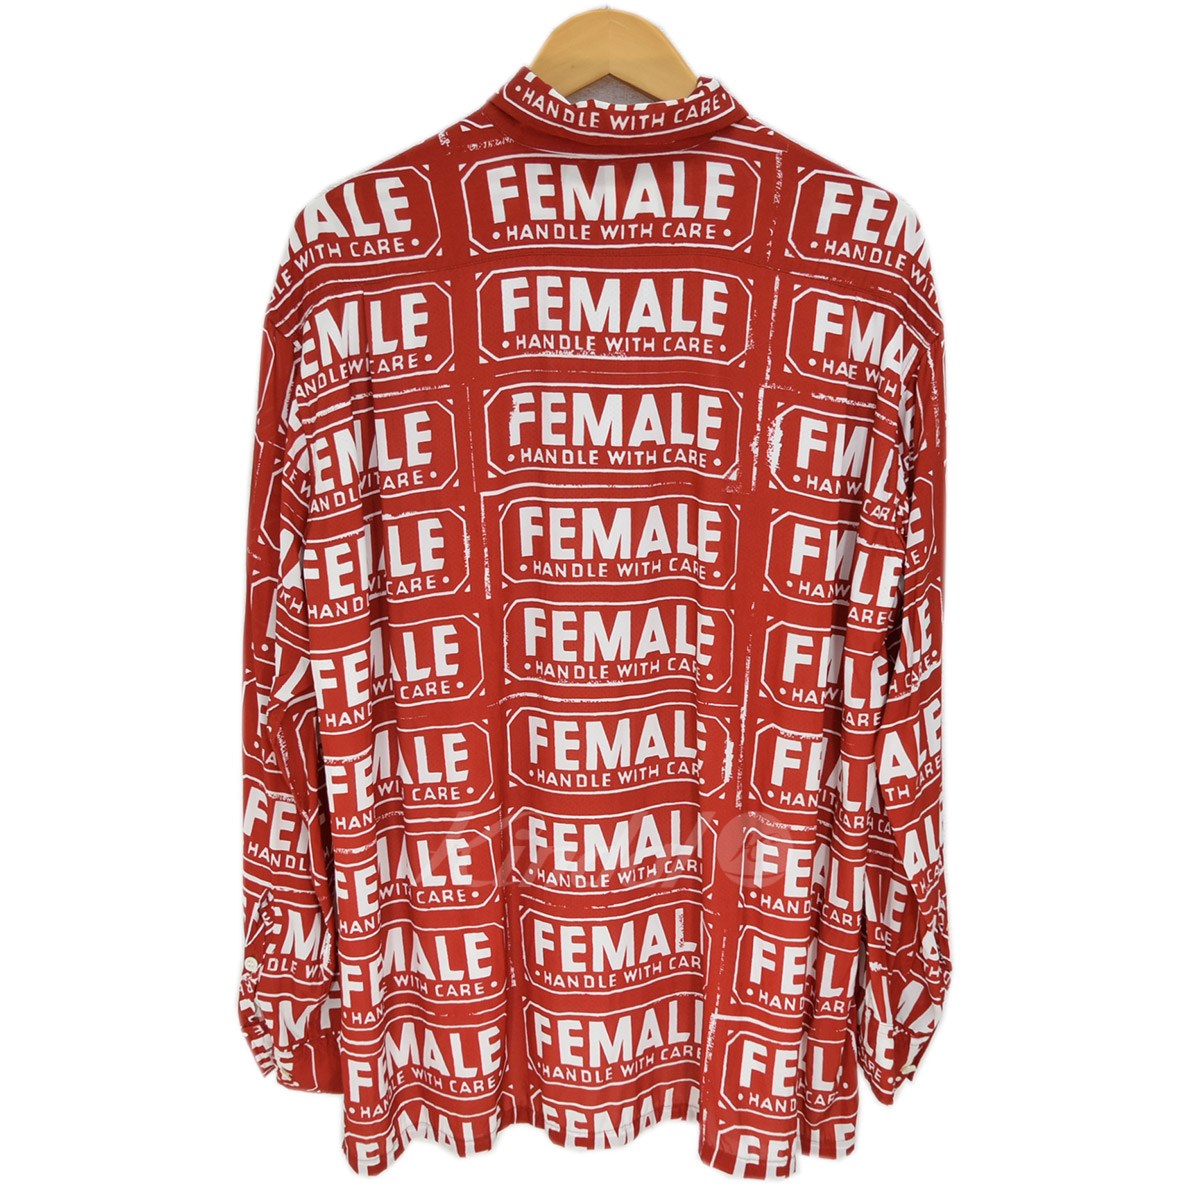 Female Mixed Shirts レタープリント ビッグシルエットシャツ 19AW サンプル品